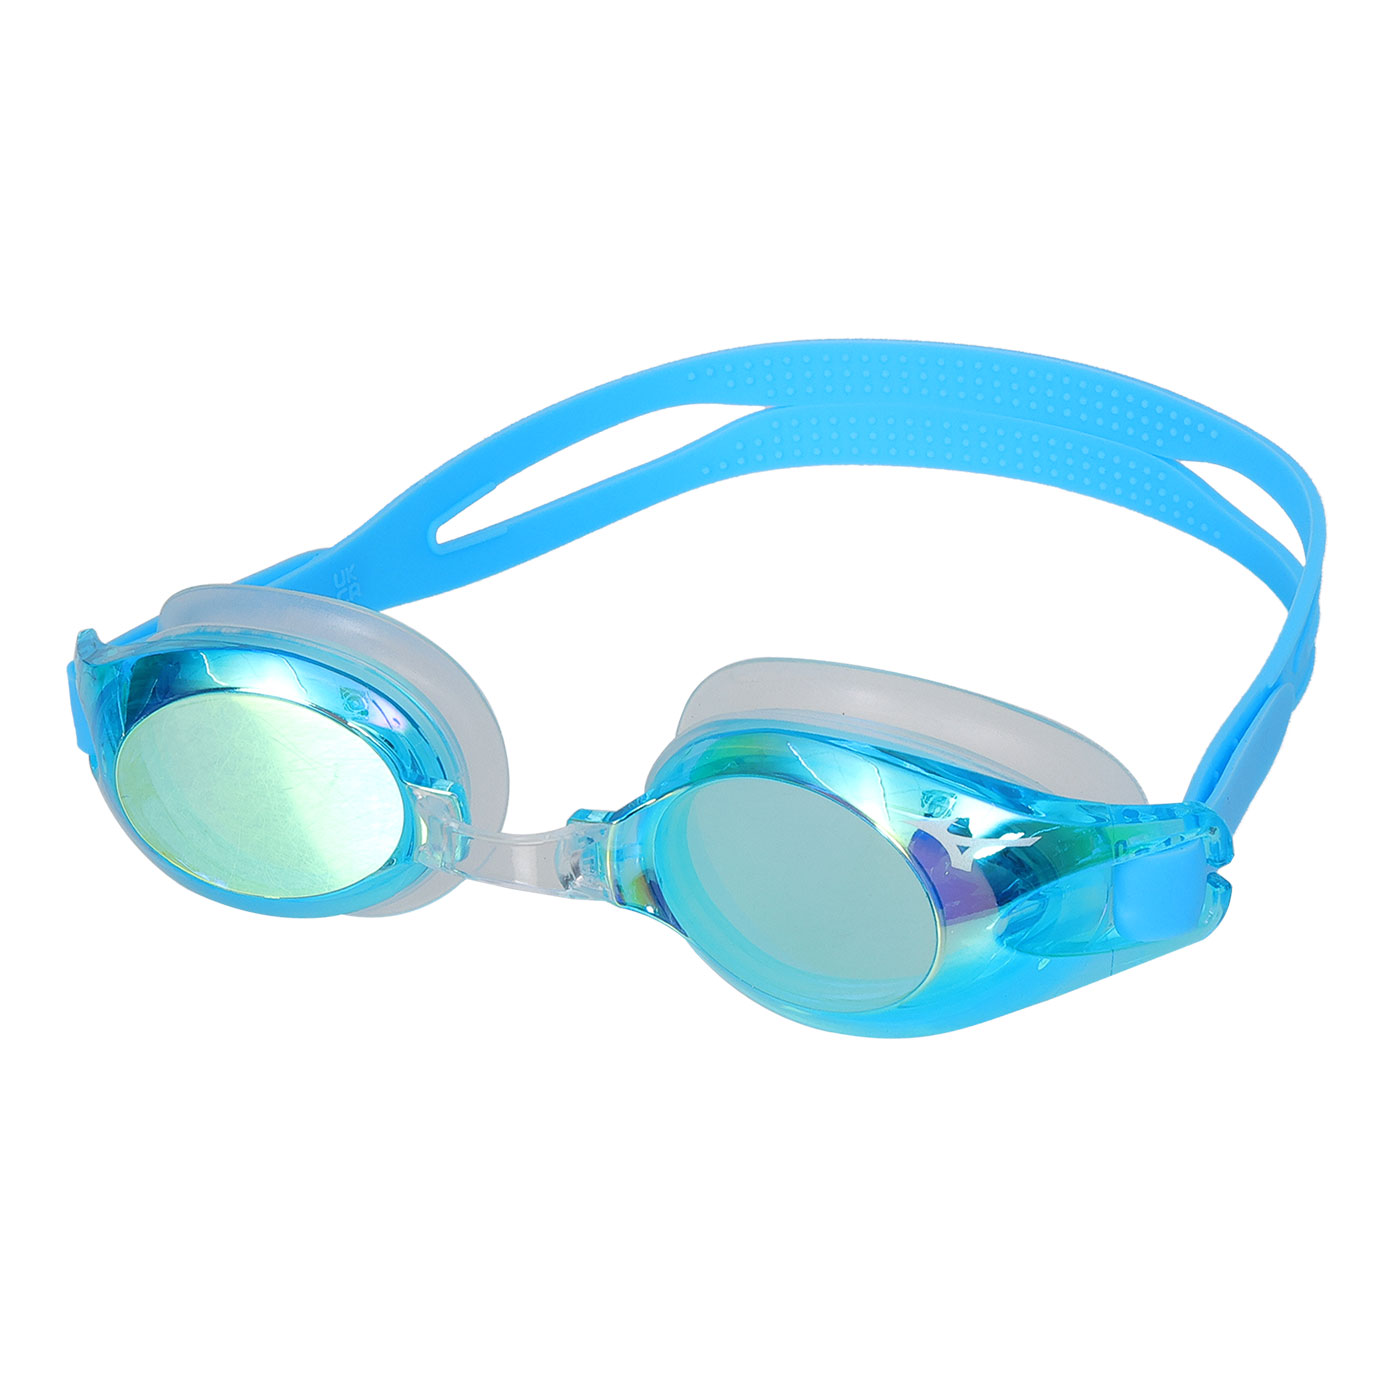 MIZUNO 泳鏡  SWIM N3TEB72100-19 - 水藍綠